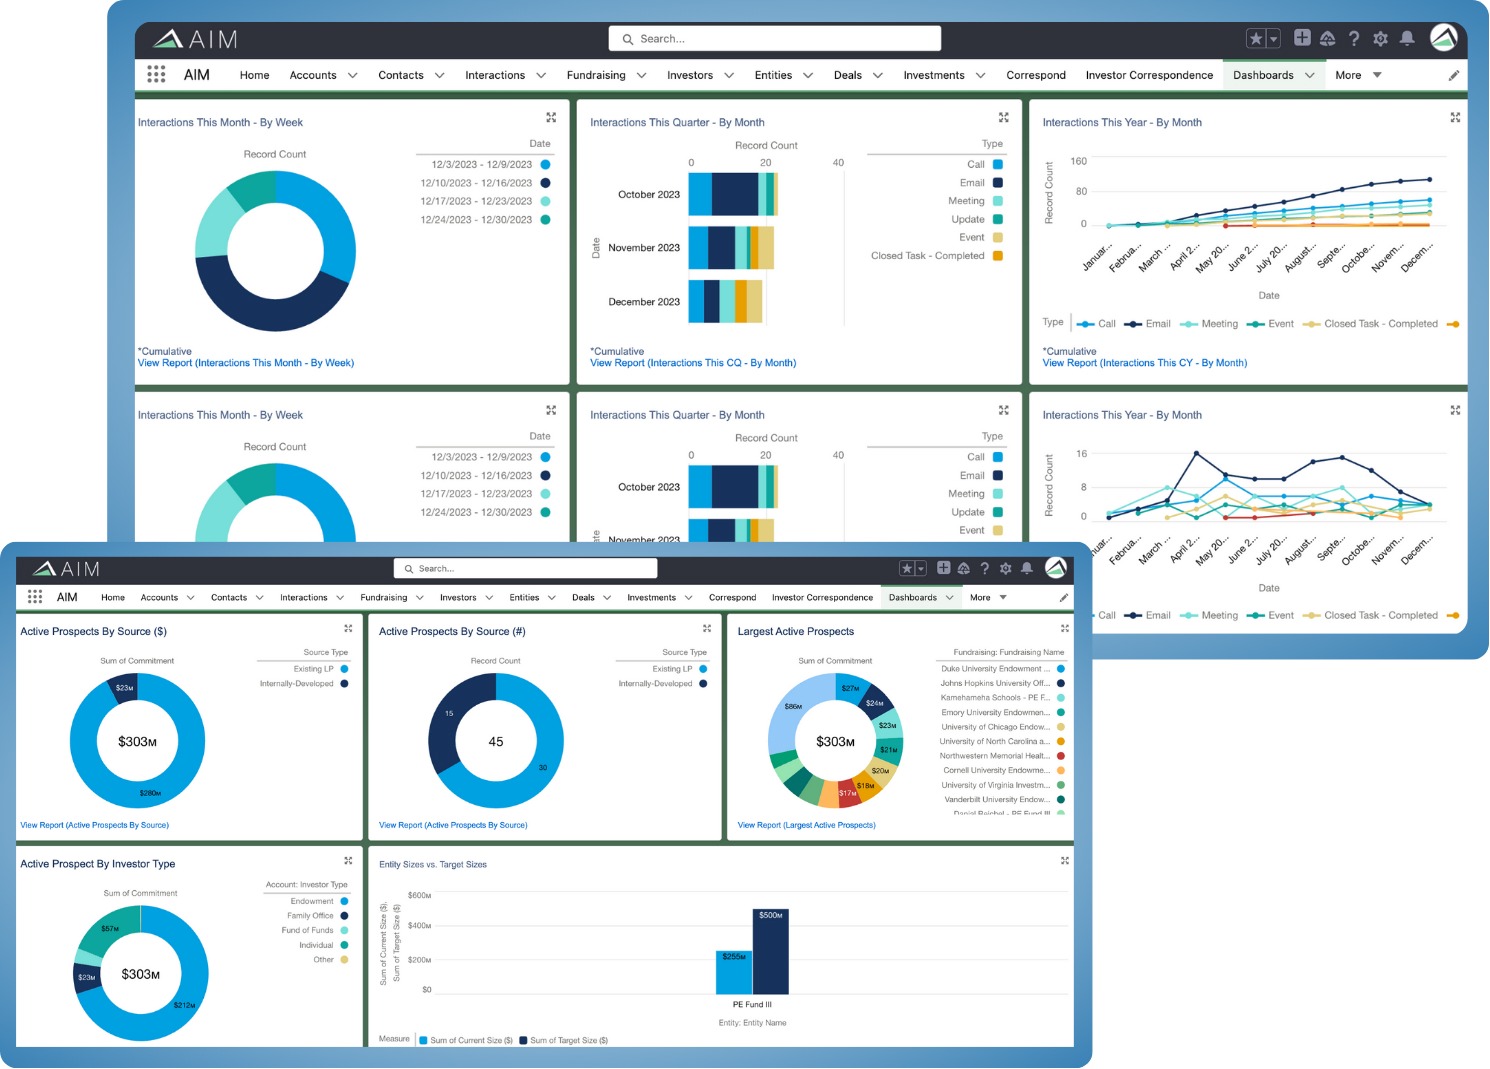 Screenshot of Altvia's AIM CRM reporting and analytics dashboard